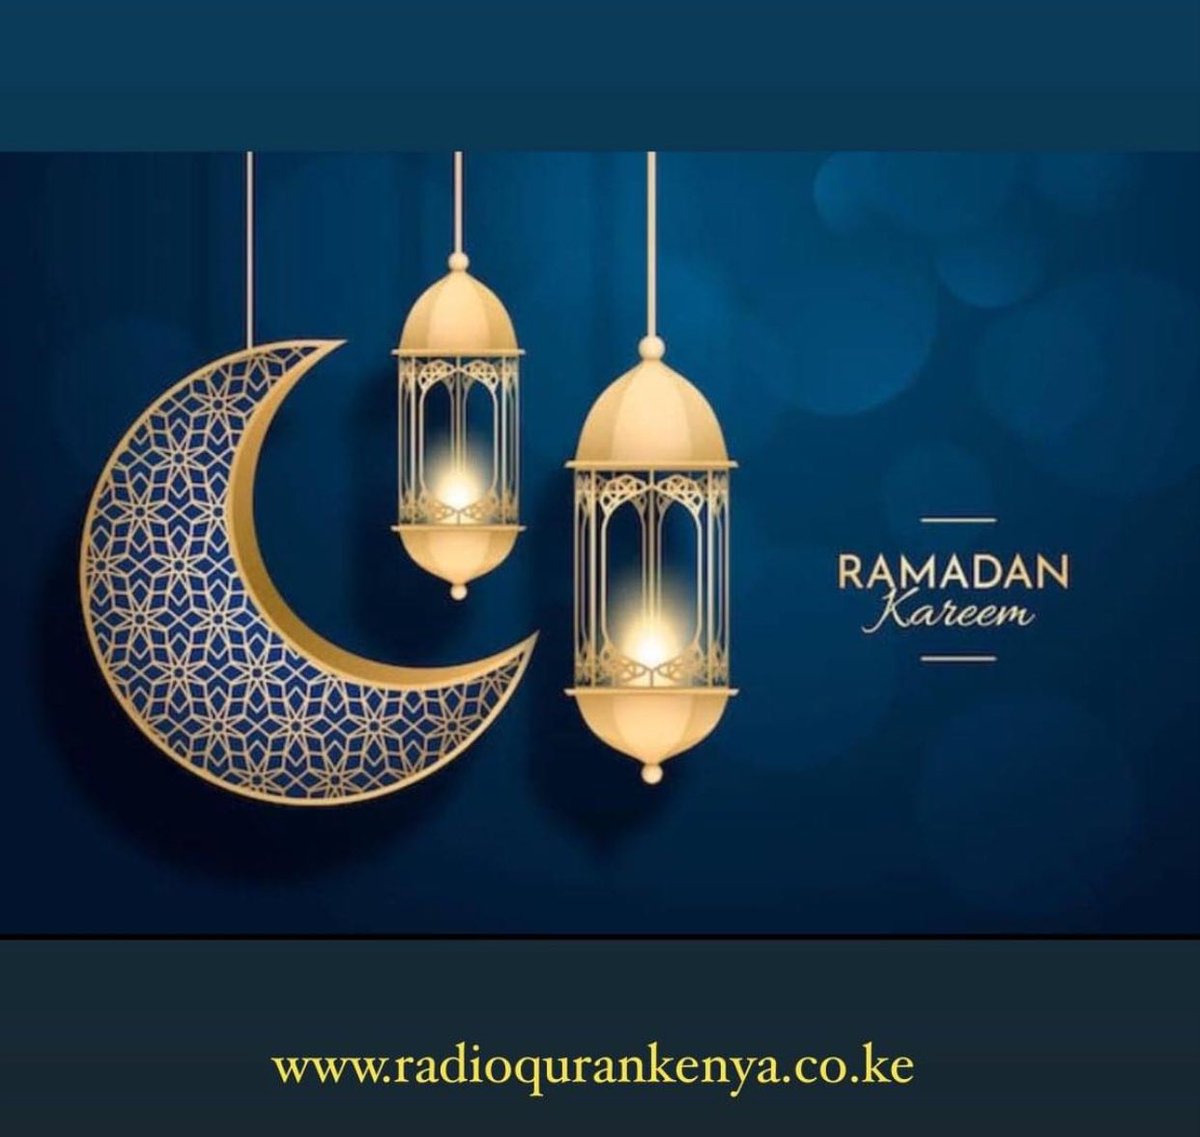 Listen to #Quran on this Holy month of #Ramadhan on radioqurankenya.co.ke #RamadanKareem